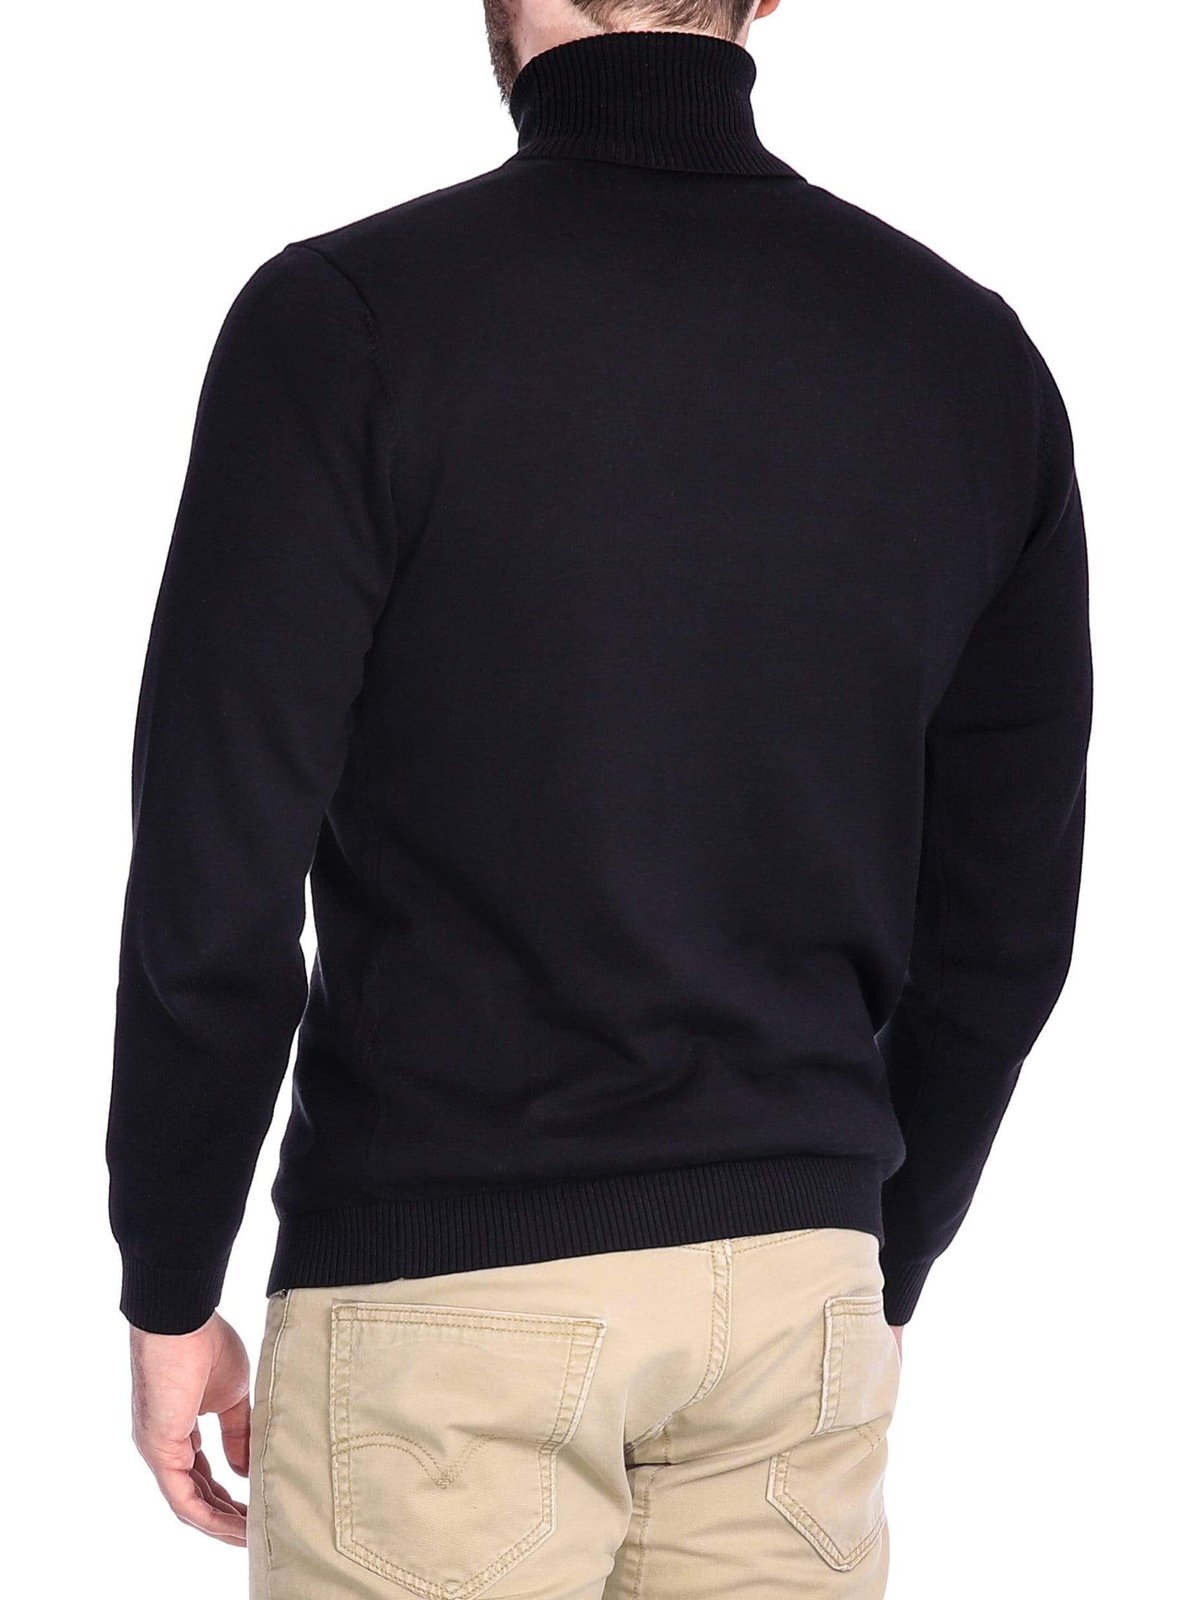 Arthur Black Arthur Black Men's Black Pullover Cotton Blend Turtleneck Sweater Shirt